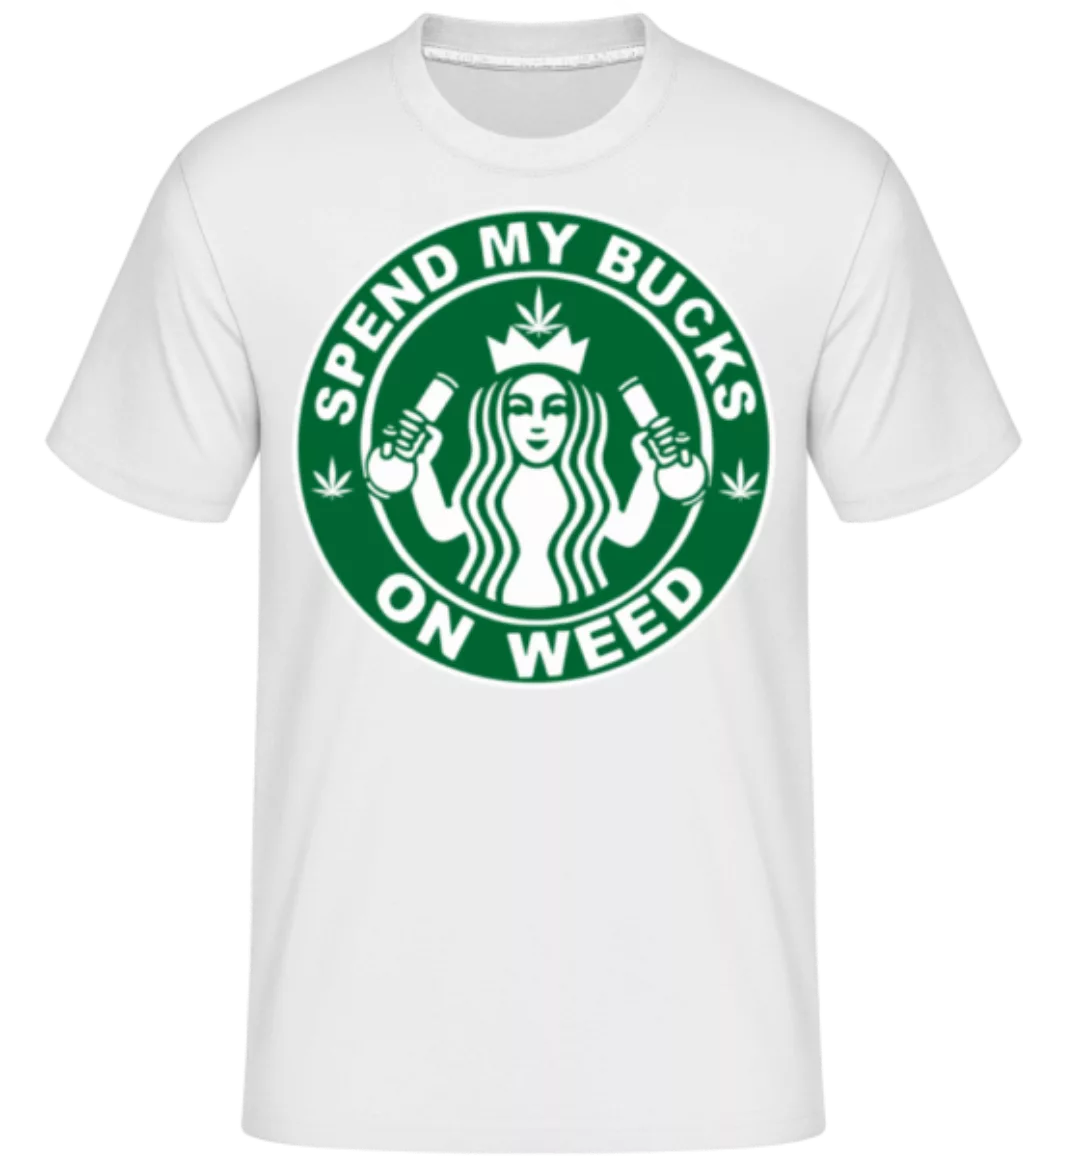 Spend My Bucks On Weed · Shirtinator Männer T-Shirt günstig online kaufen